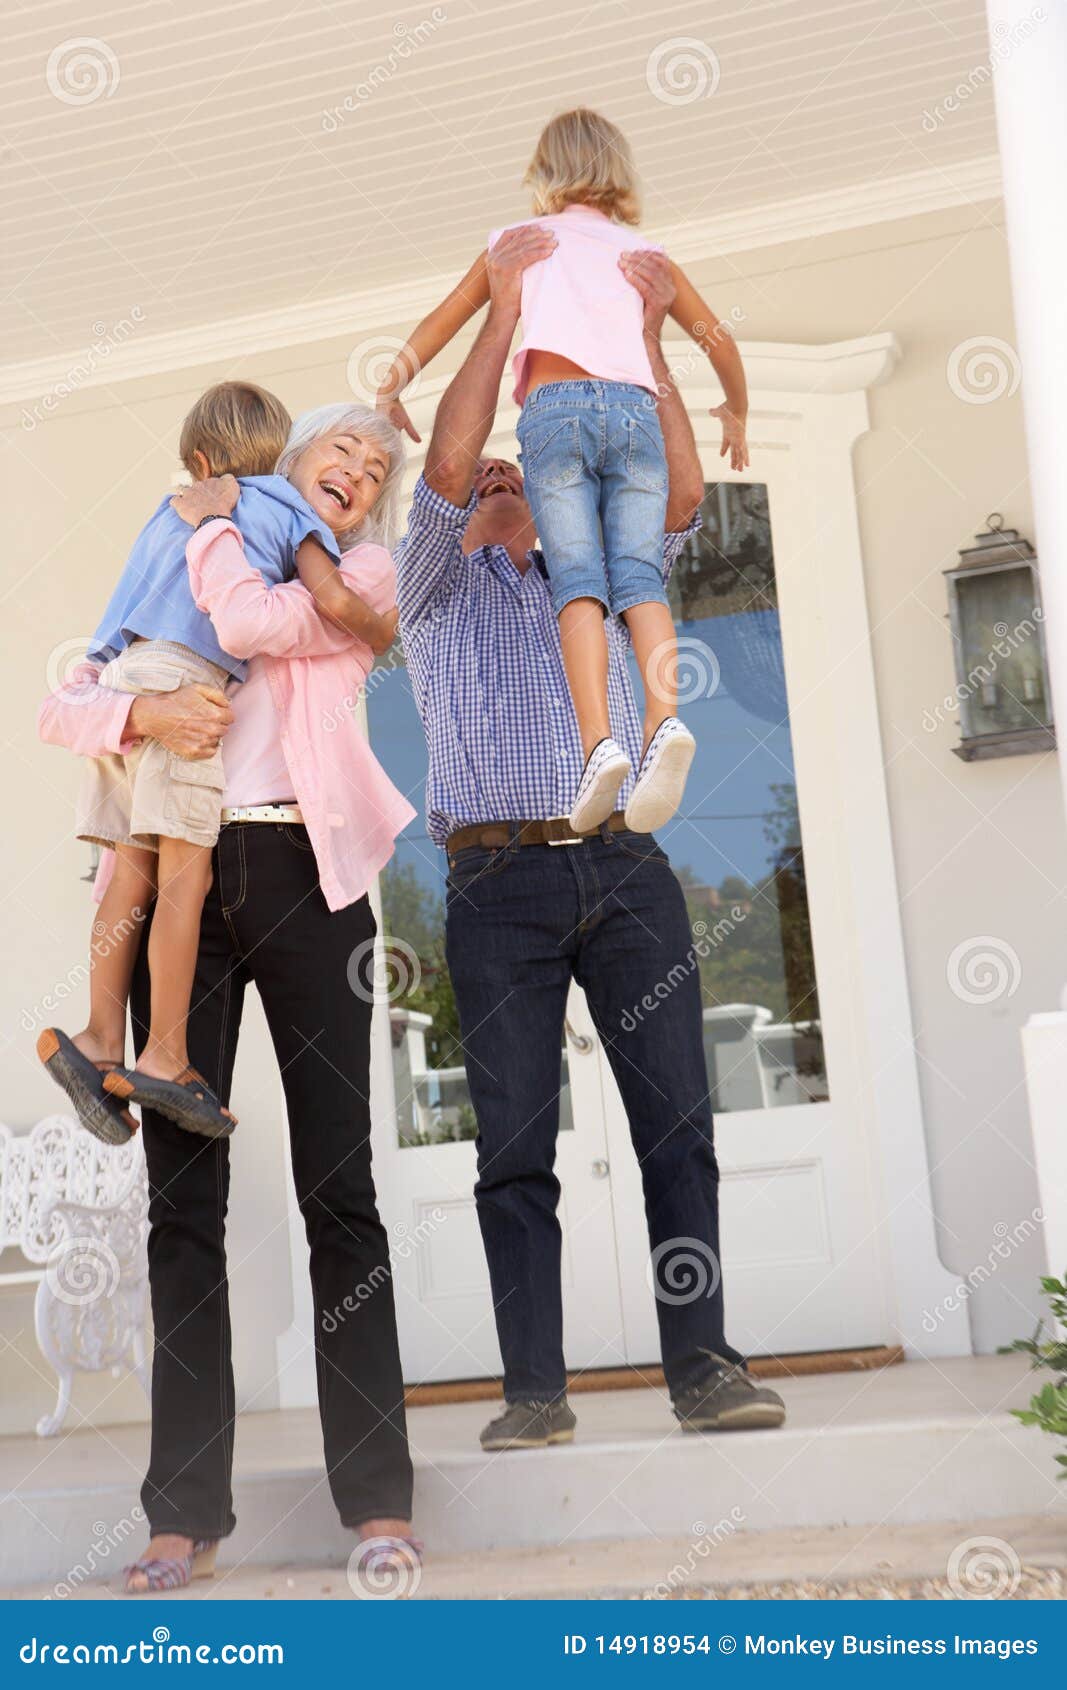 grandparents welcoming grandchildren on visit